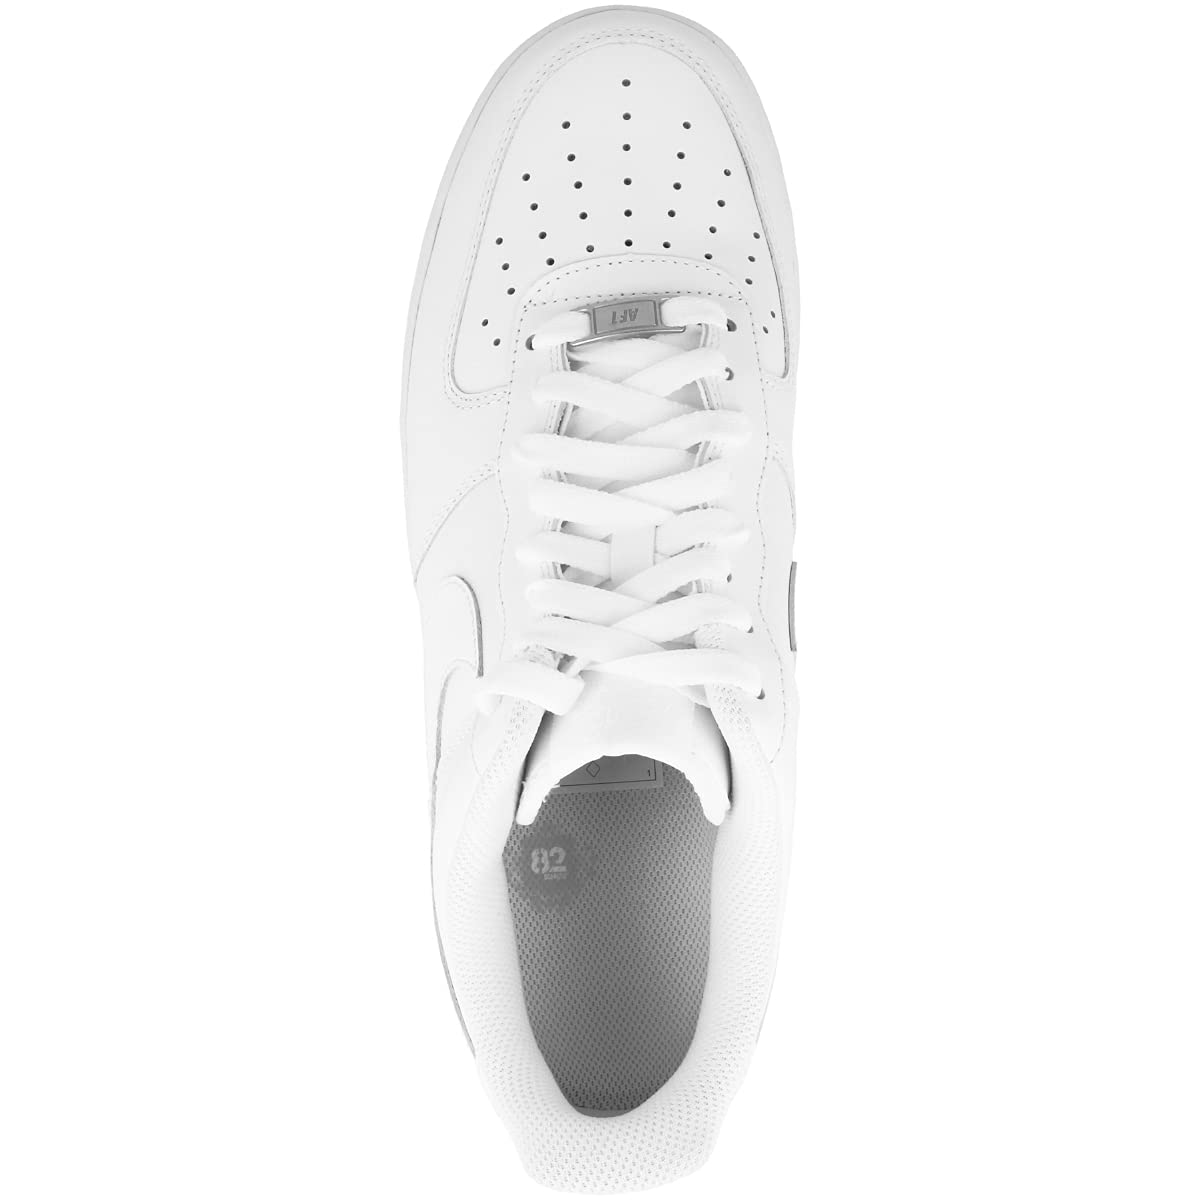 Nike Men's Basketball Shoes, White/White, 9